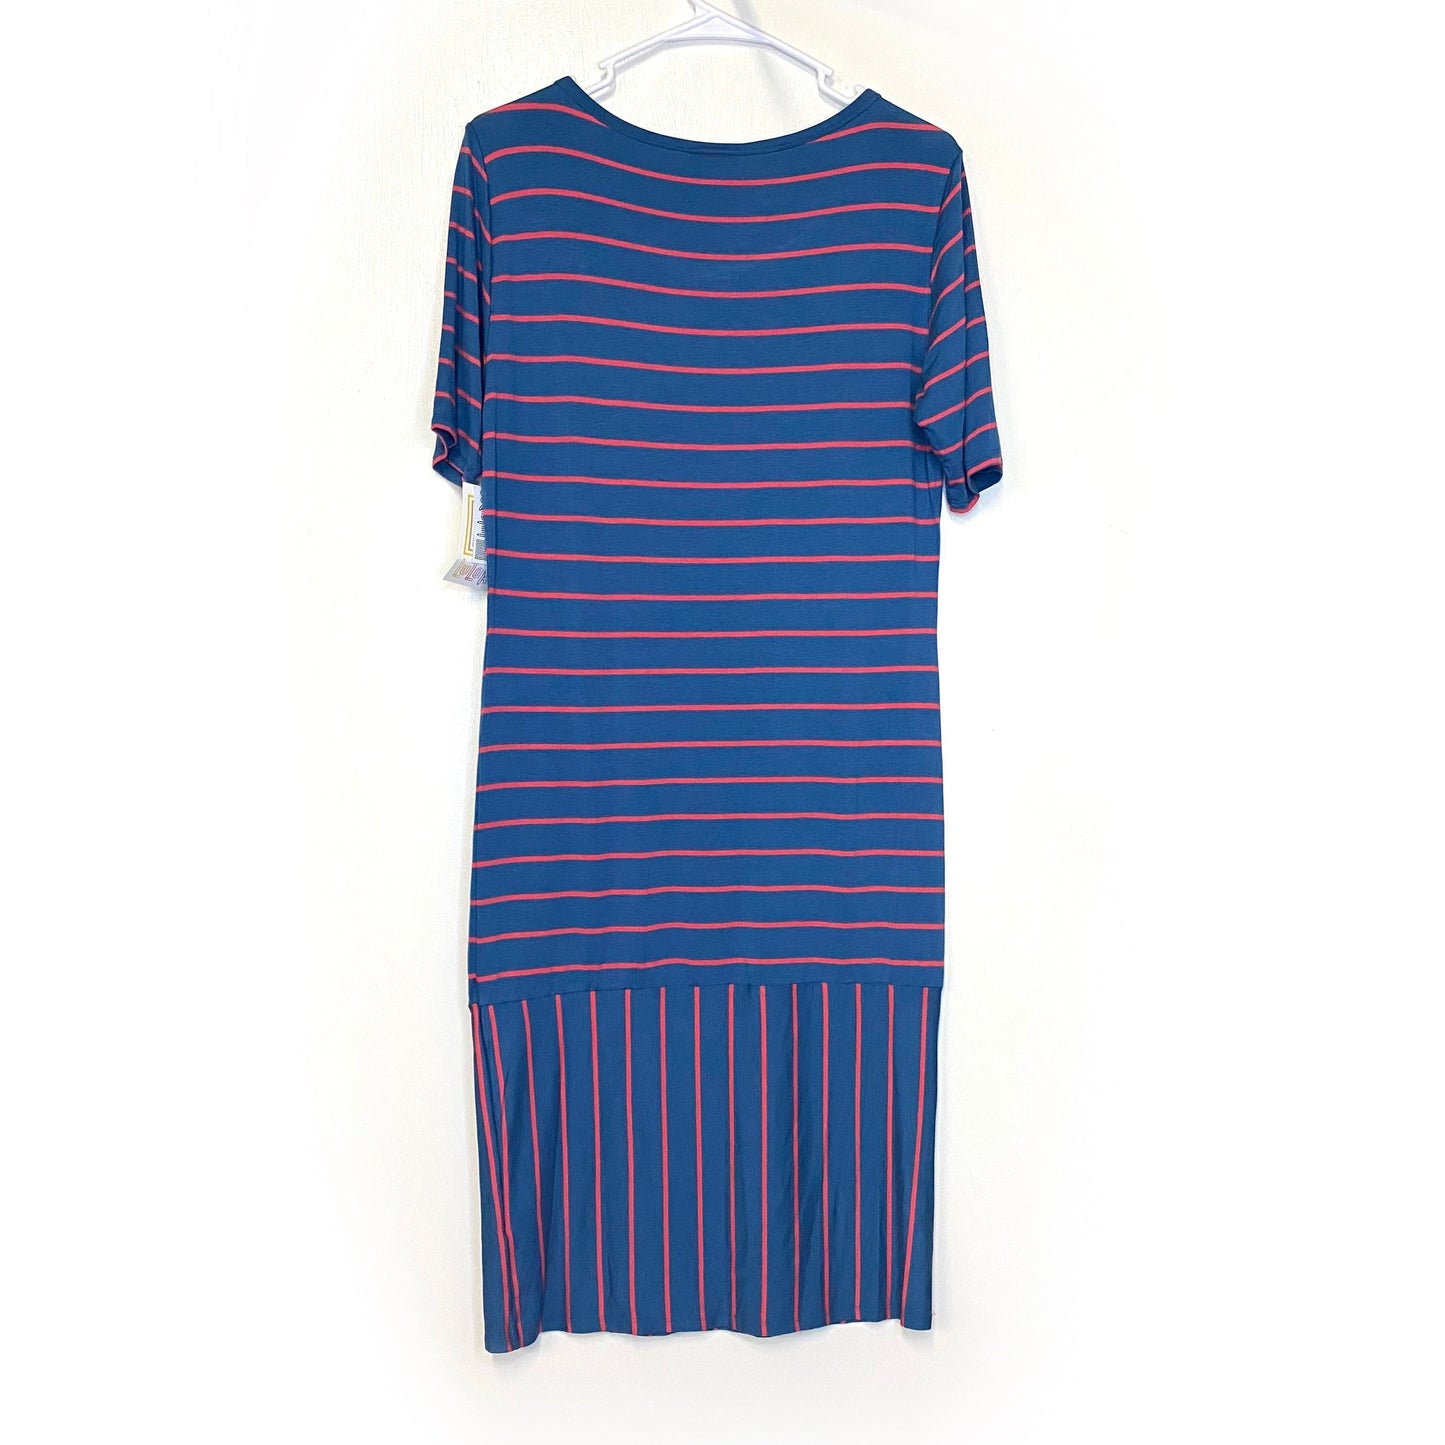 LuLaRoe Womens Size L Blue/Red Striped Print Julia Dress Scoop Neck ½ Sleeves S/s